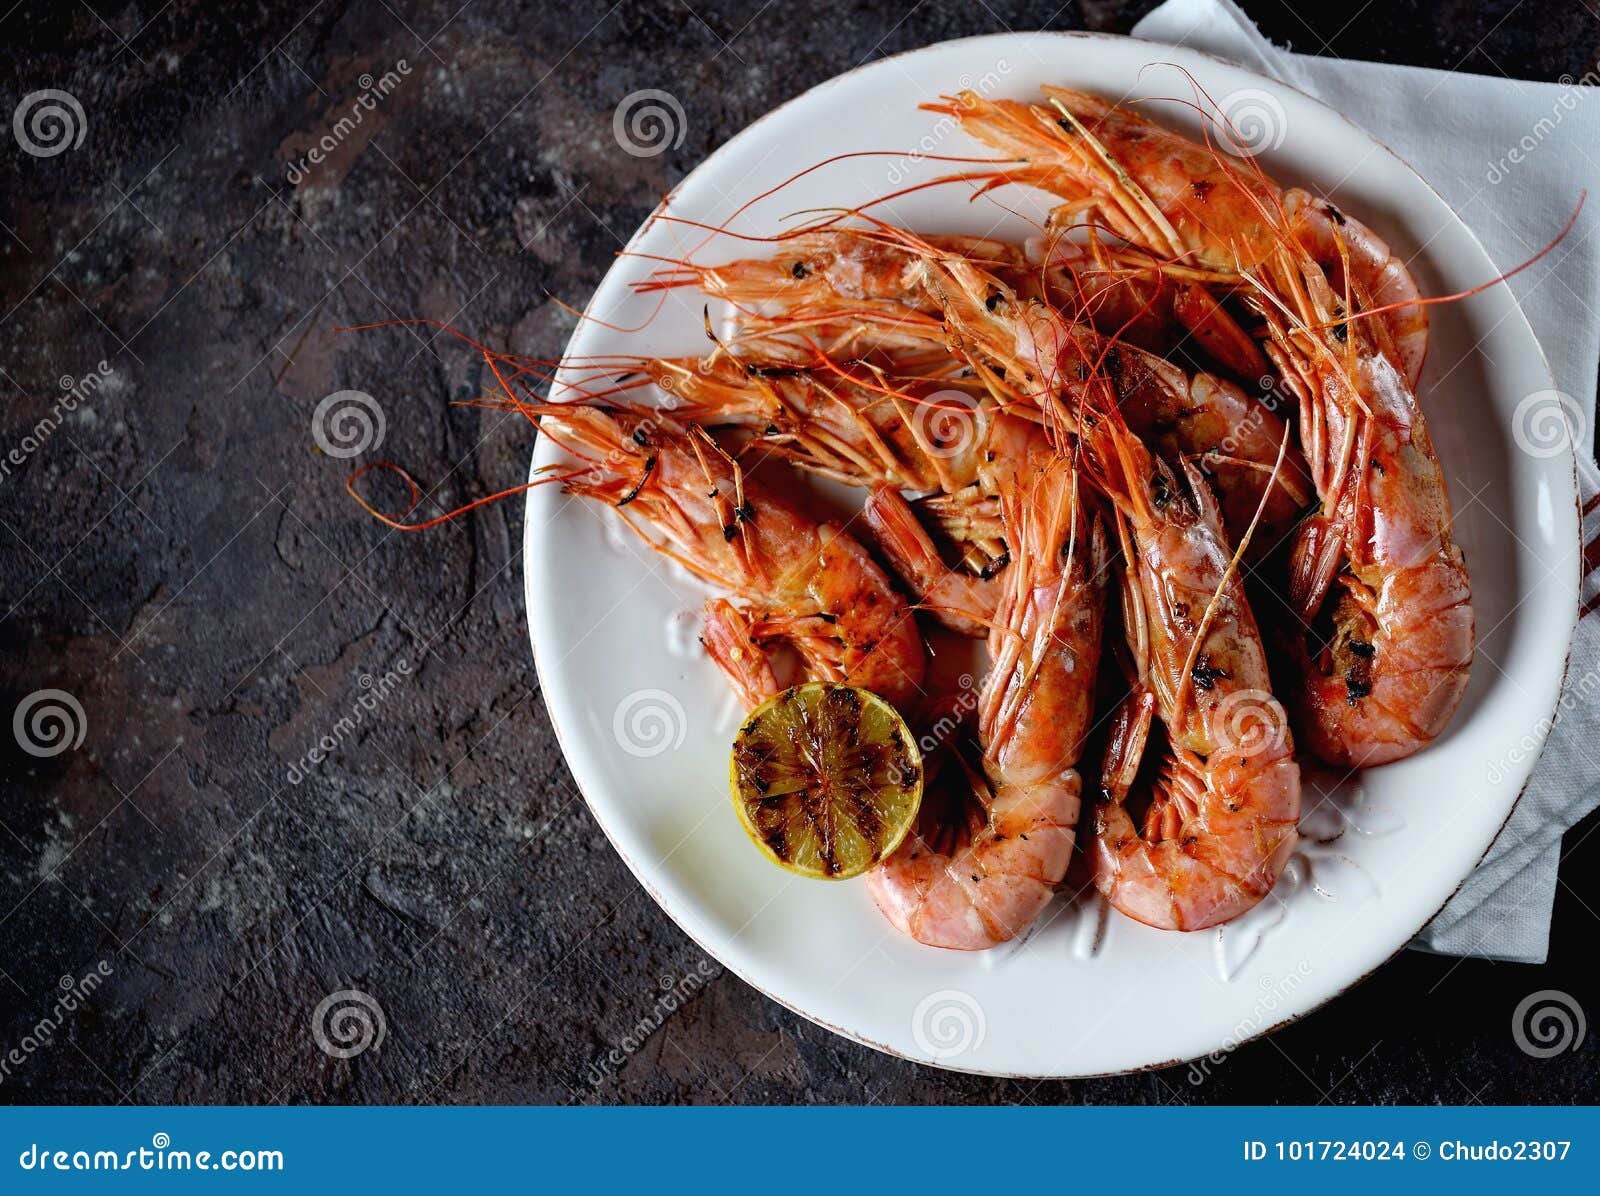 https://thumbs.dreamstime.com/z/grilled-shrimp-garlic-soy-sauce-olive-oil-ginger-chili-pepper-top-view-food-101724024.jpg